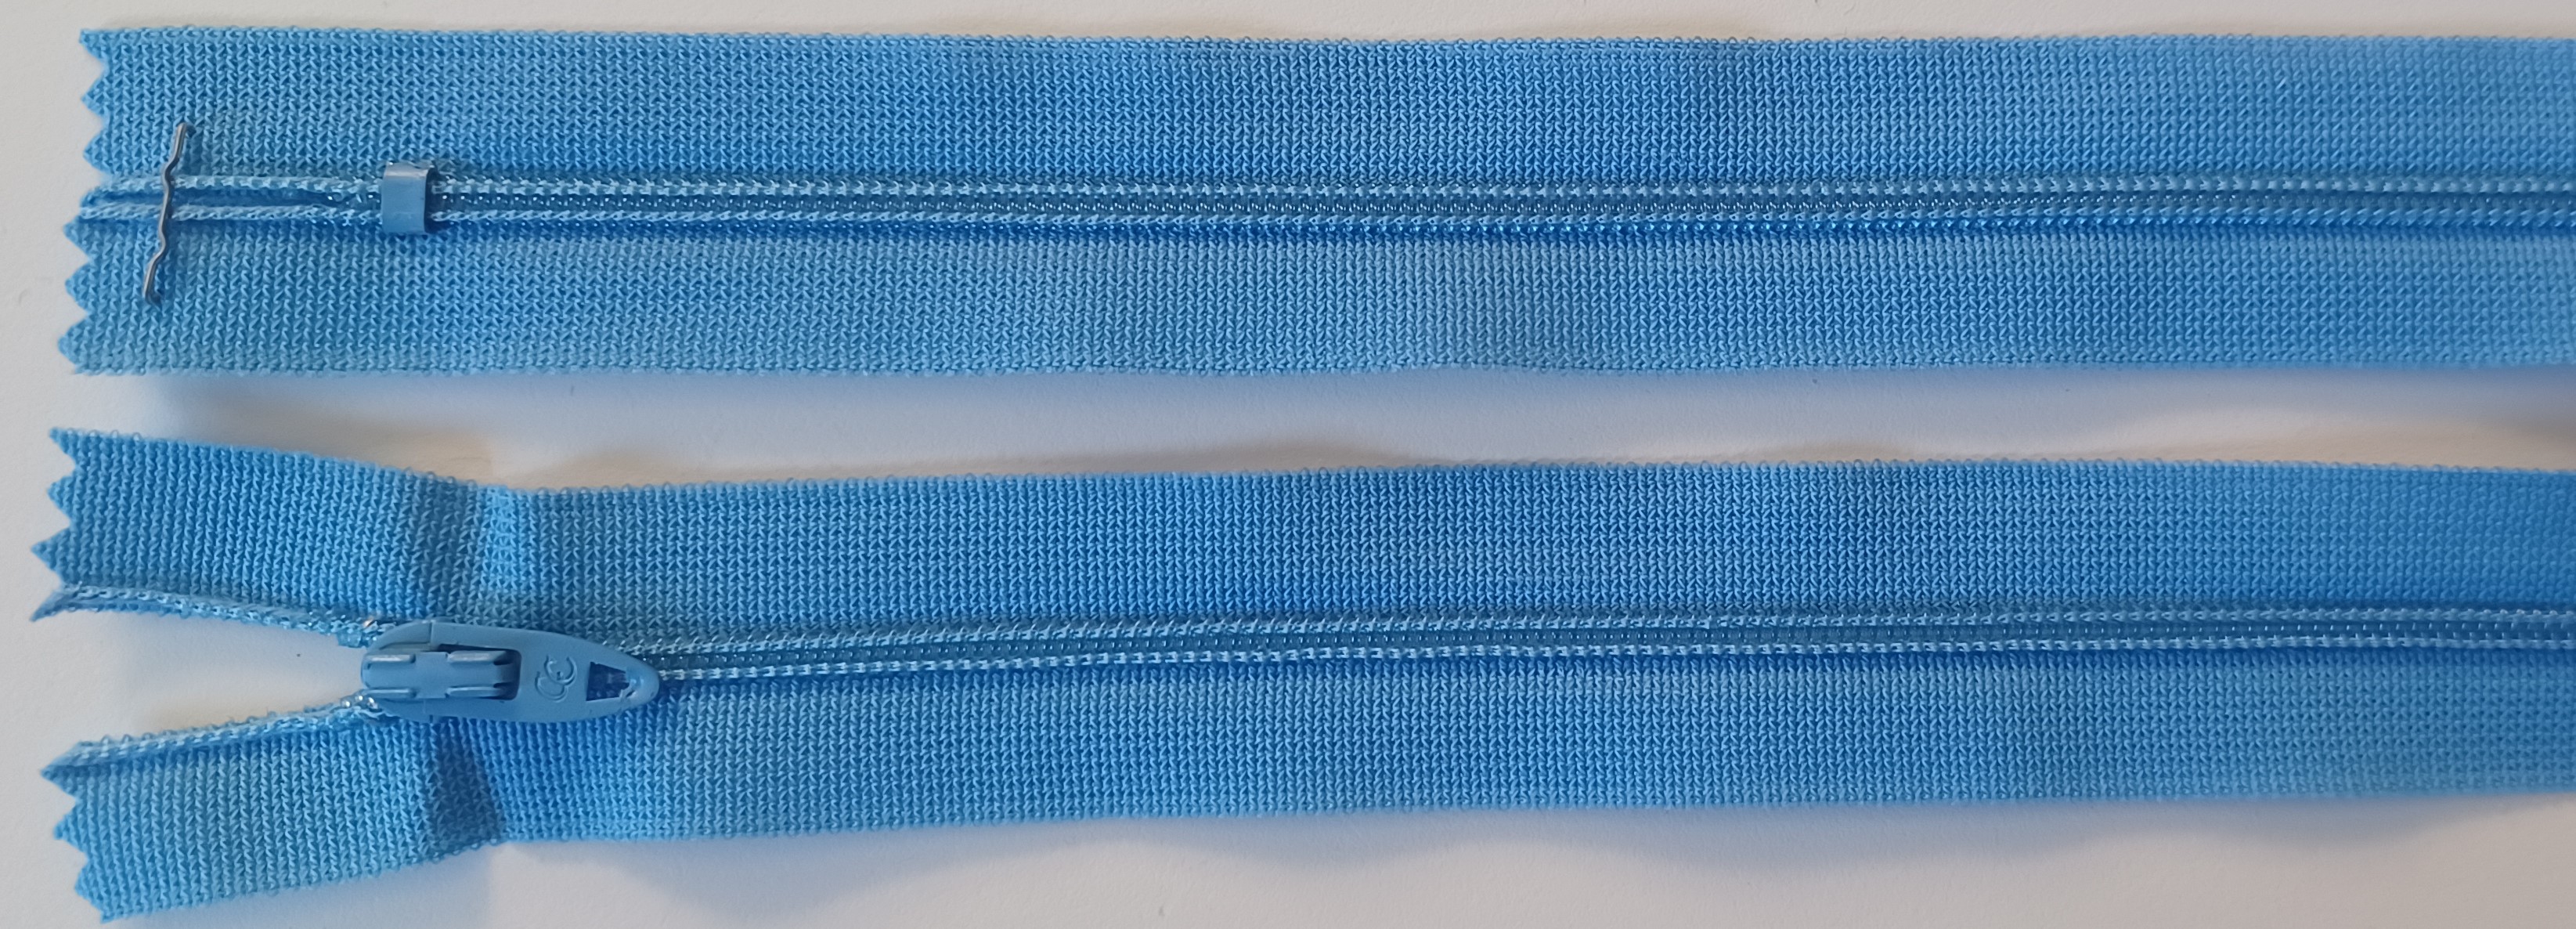 Coats & Clark 7" Blue Nylon Coil Zipper